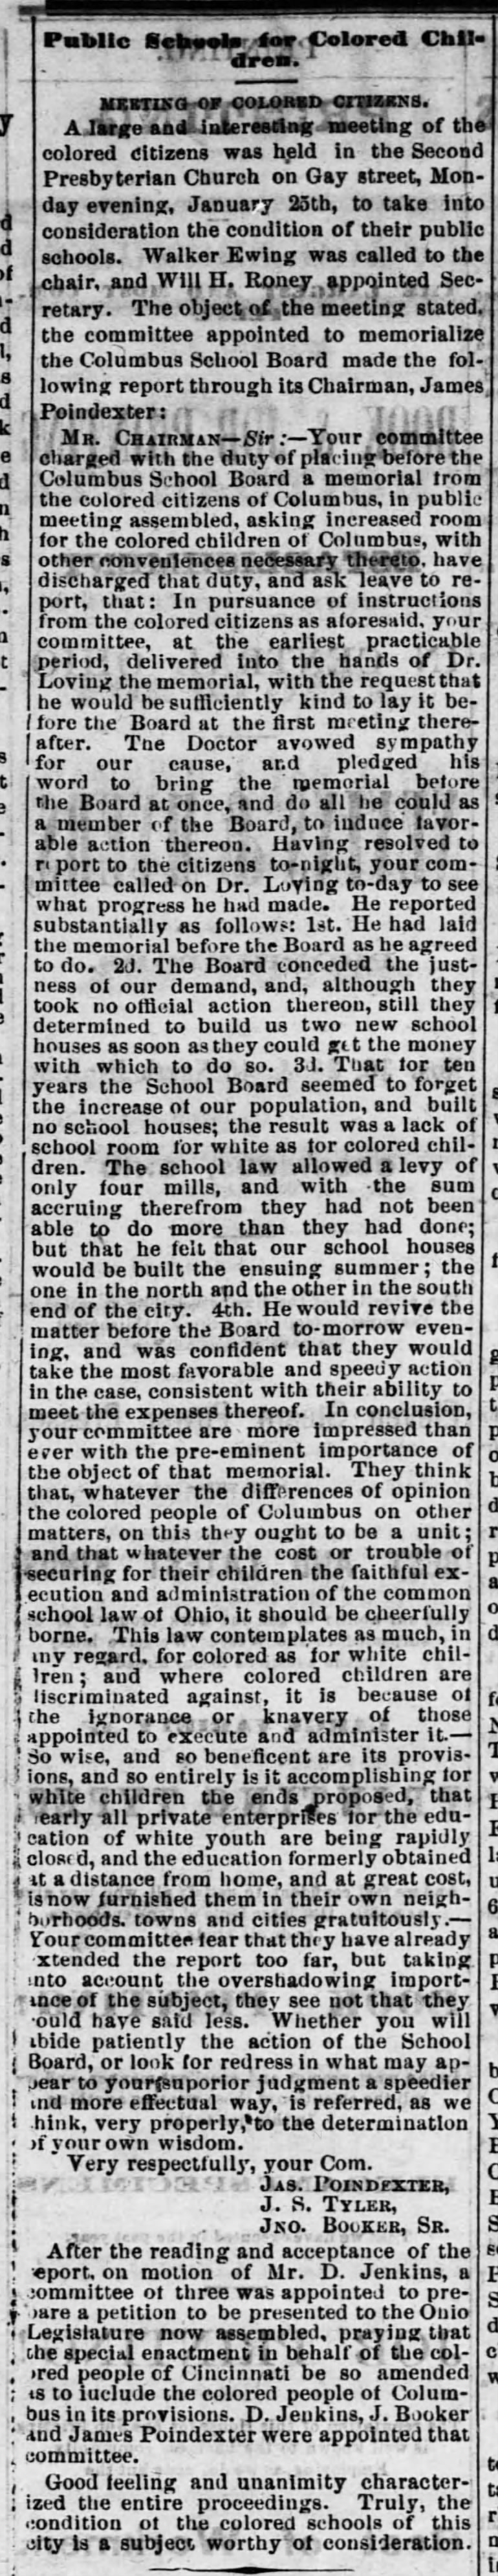 Public Schools for Colored Children, Daily Ohio Statesman (Columbus, Ohio) January 27, 1869, page 3